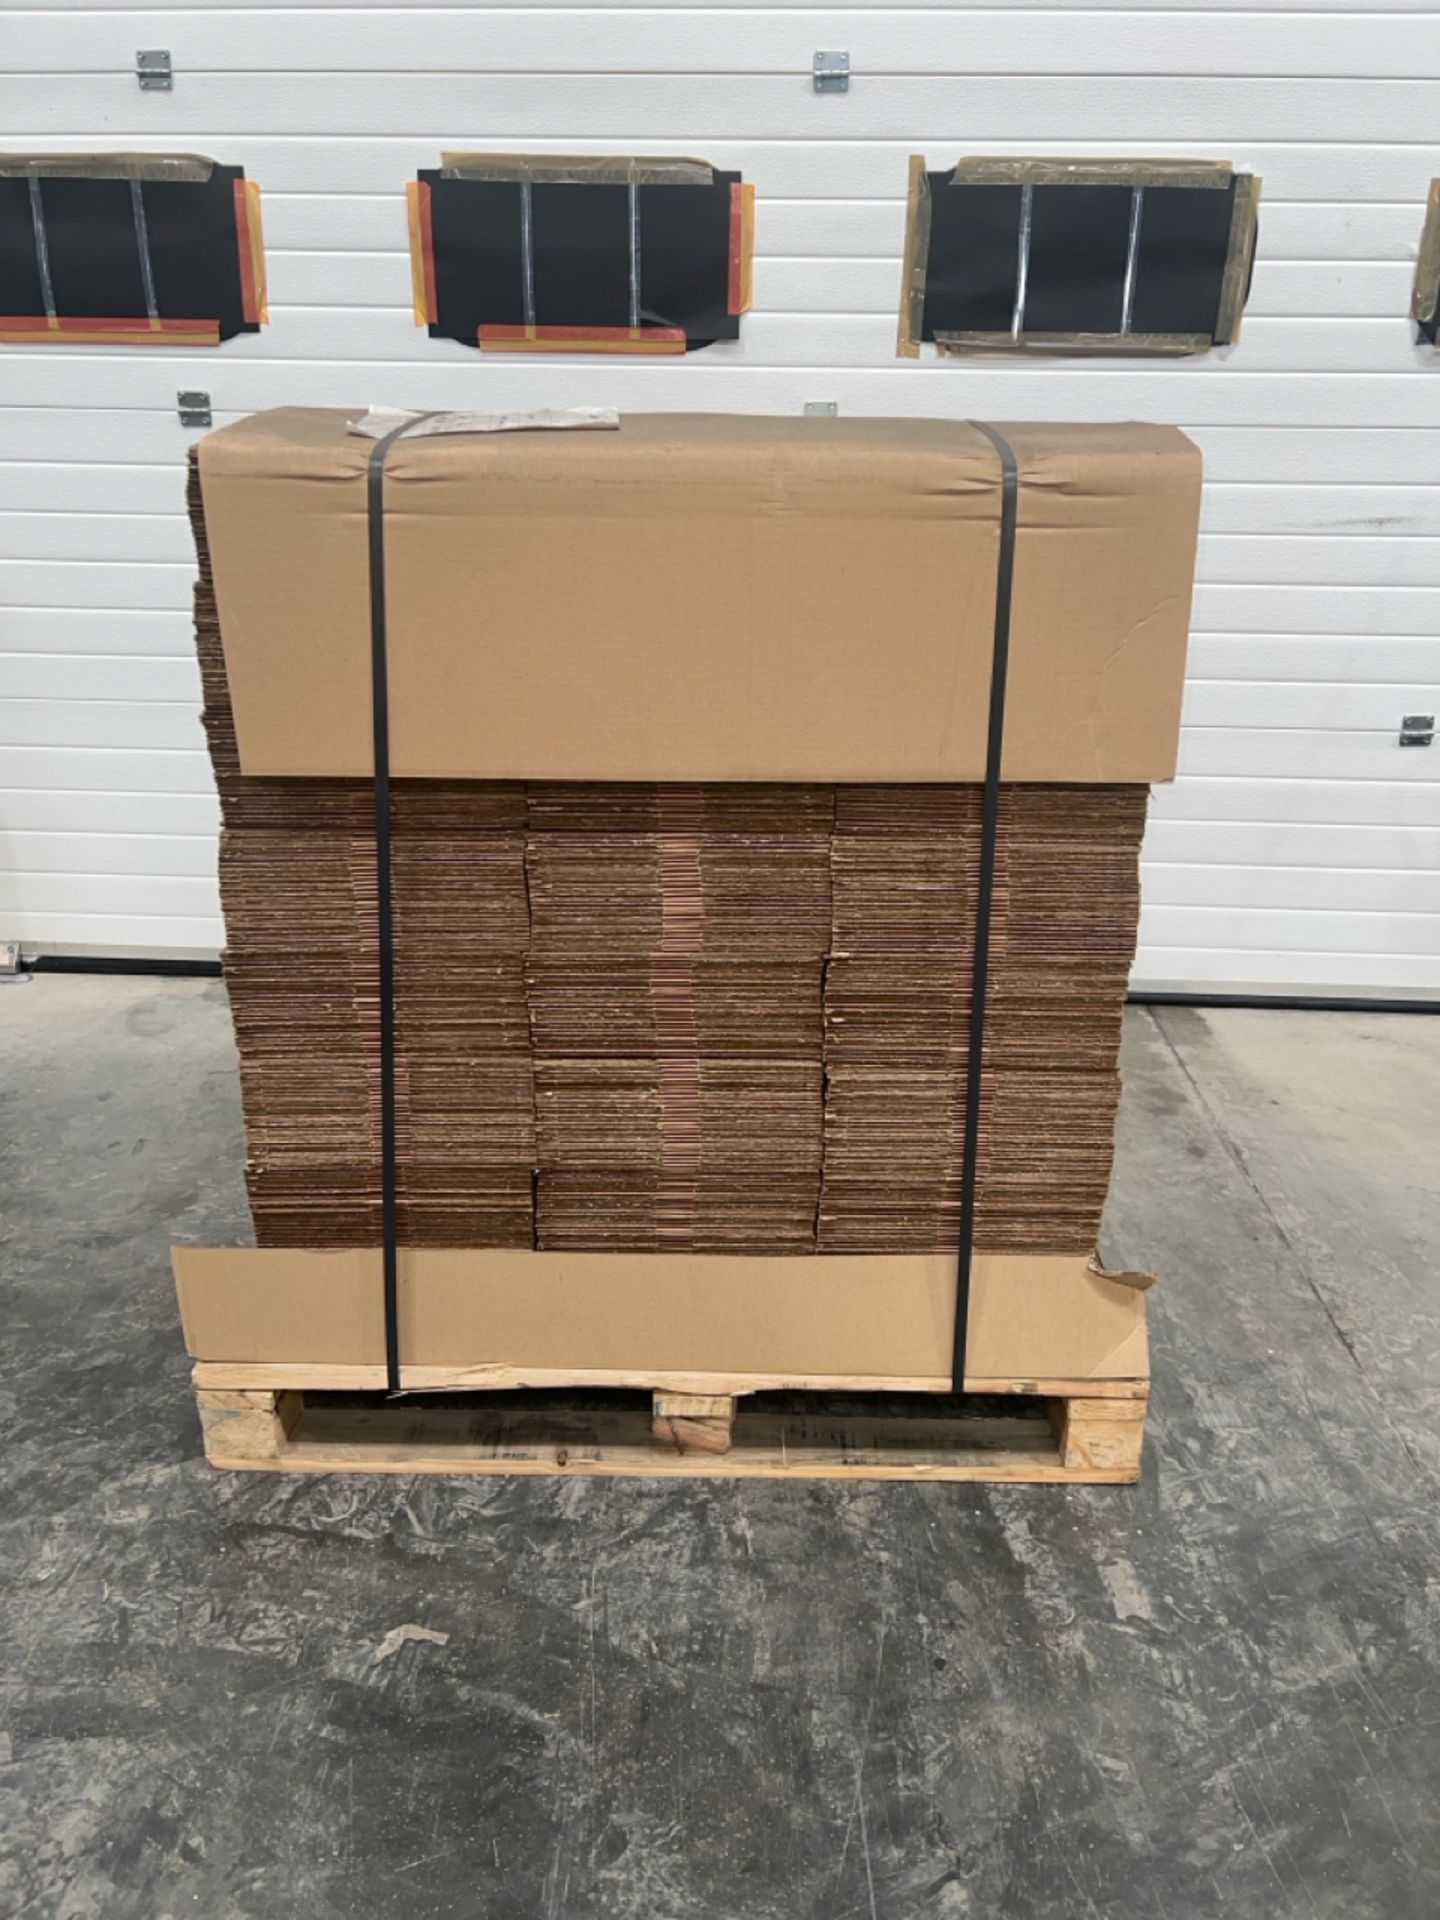 Cardboard Flat Packboxes x 600 - 35cm x 32cm x 4.5cm. - Image 2 of 3